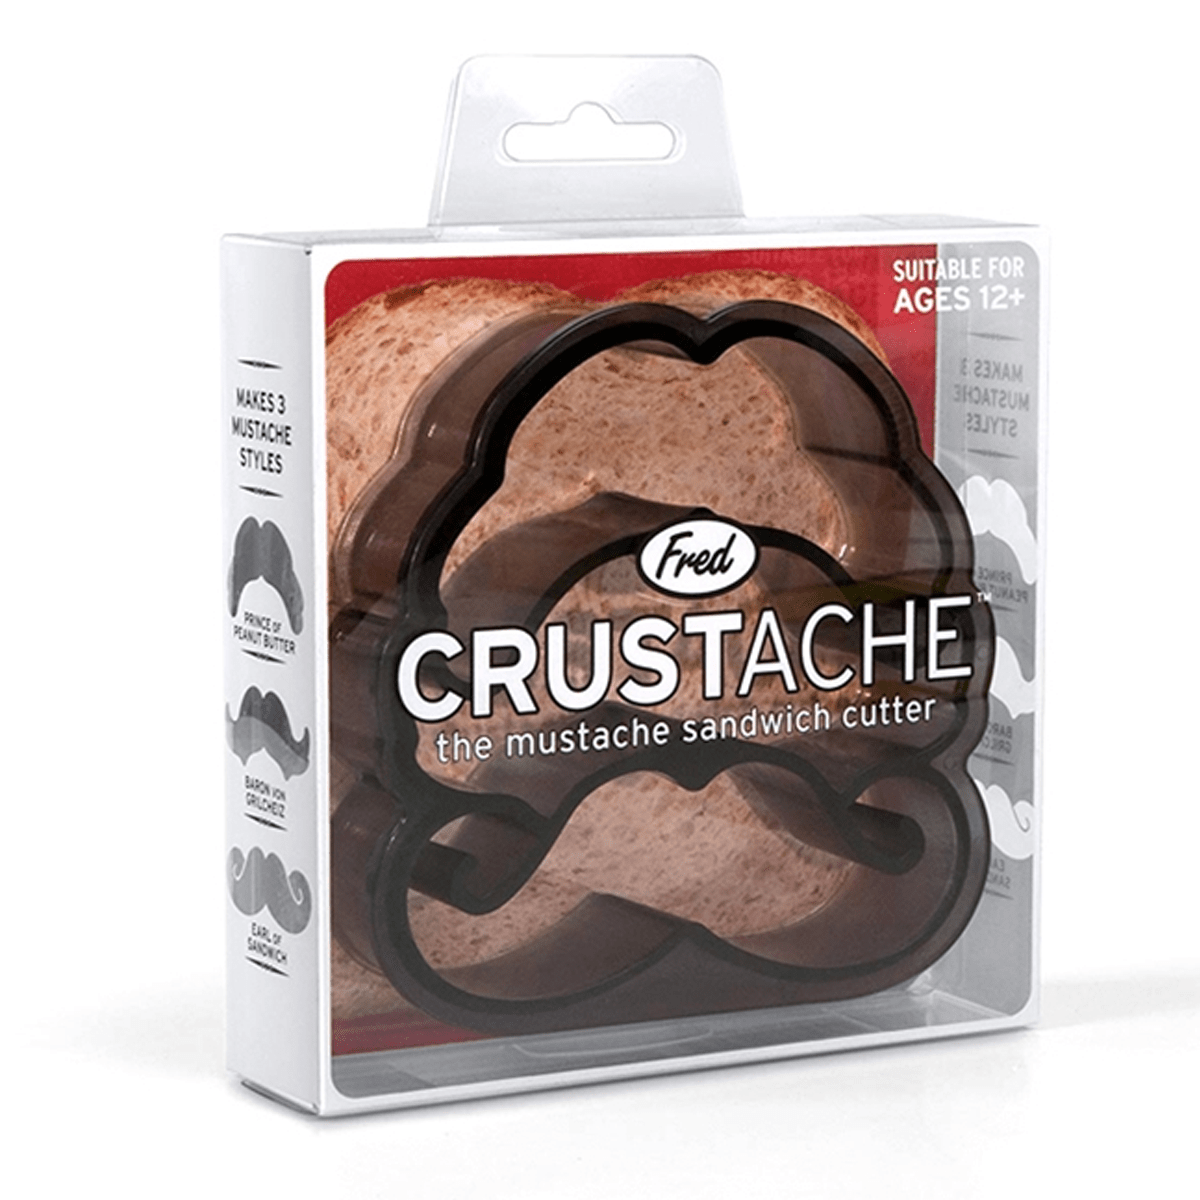 Crustache Novelty Mustache Shaped Crust Cutter - Fred